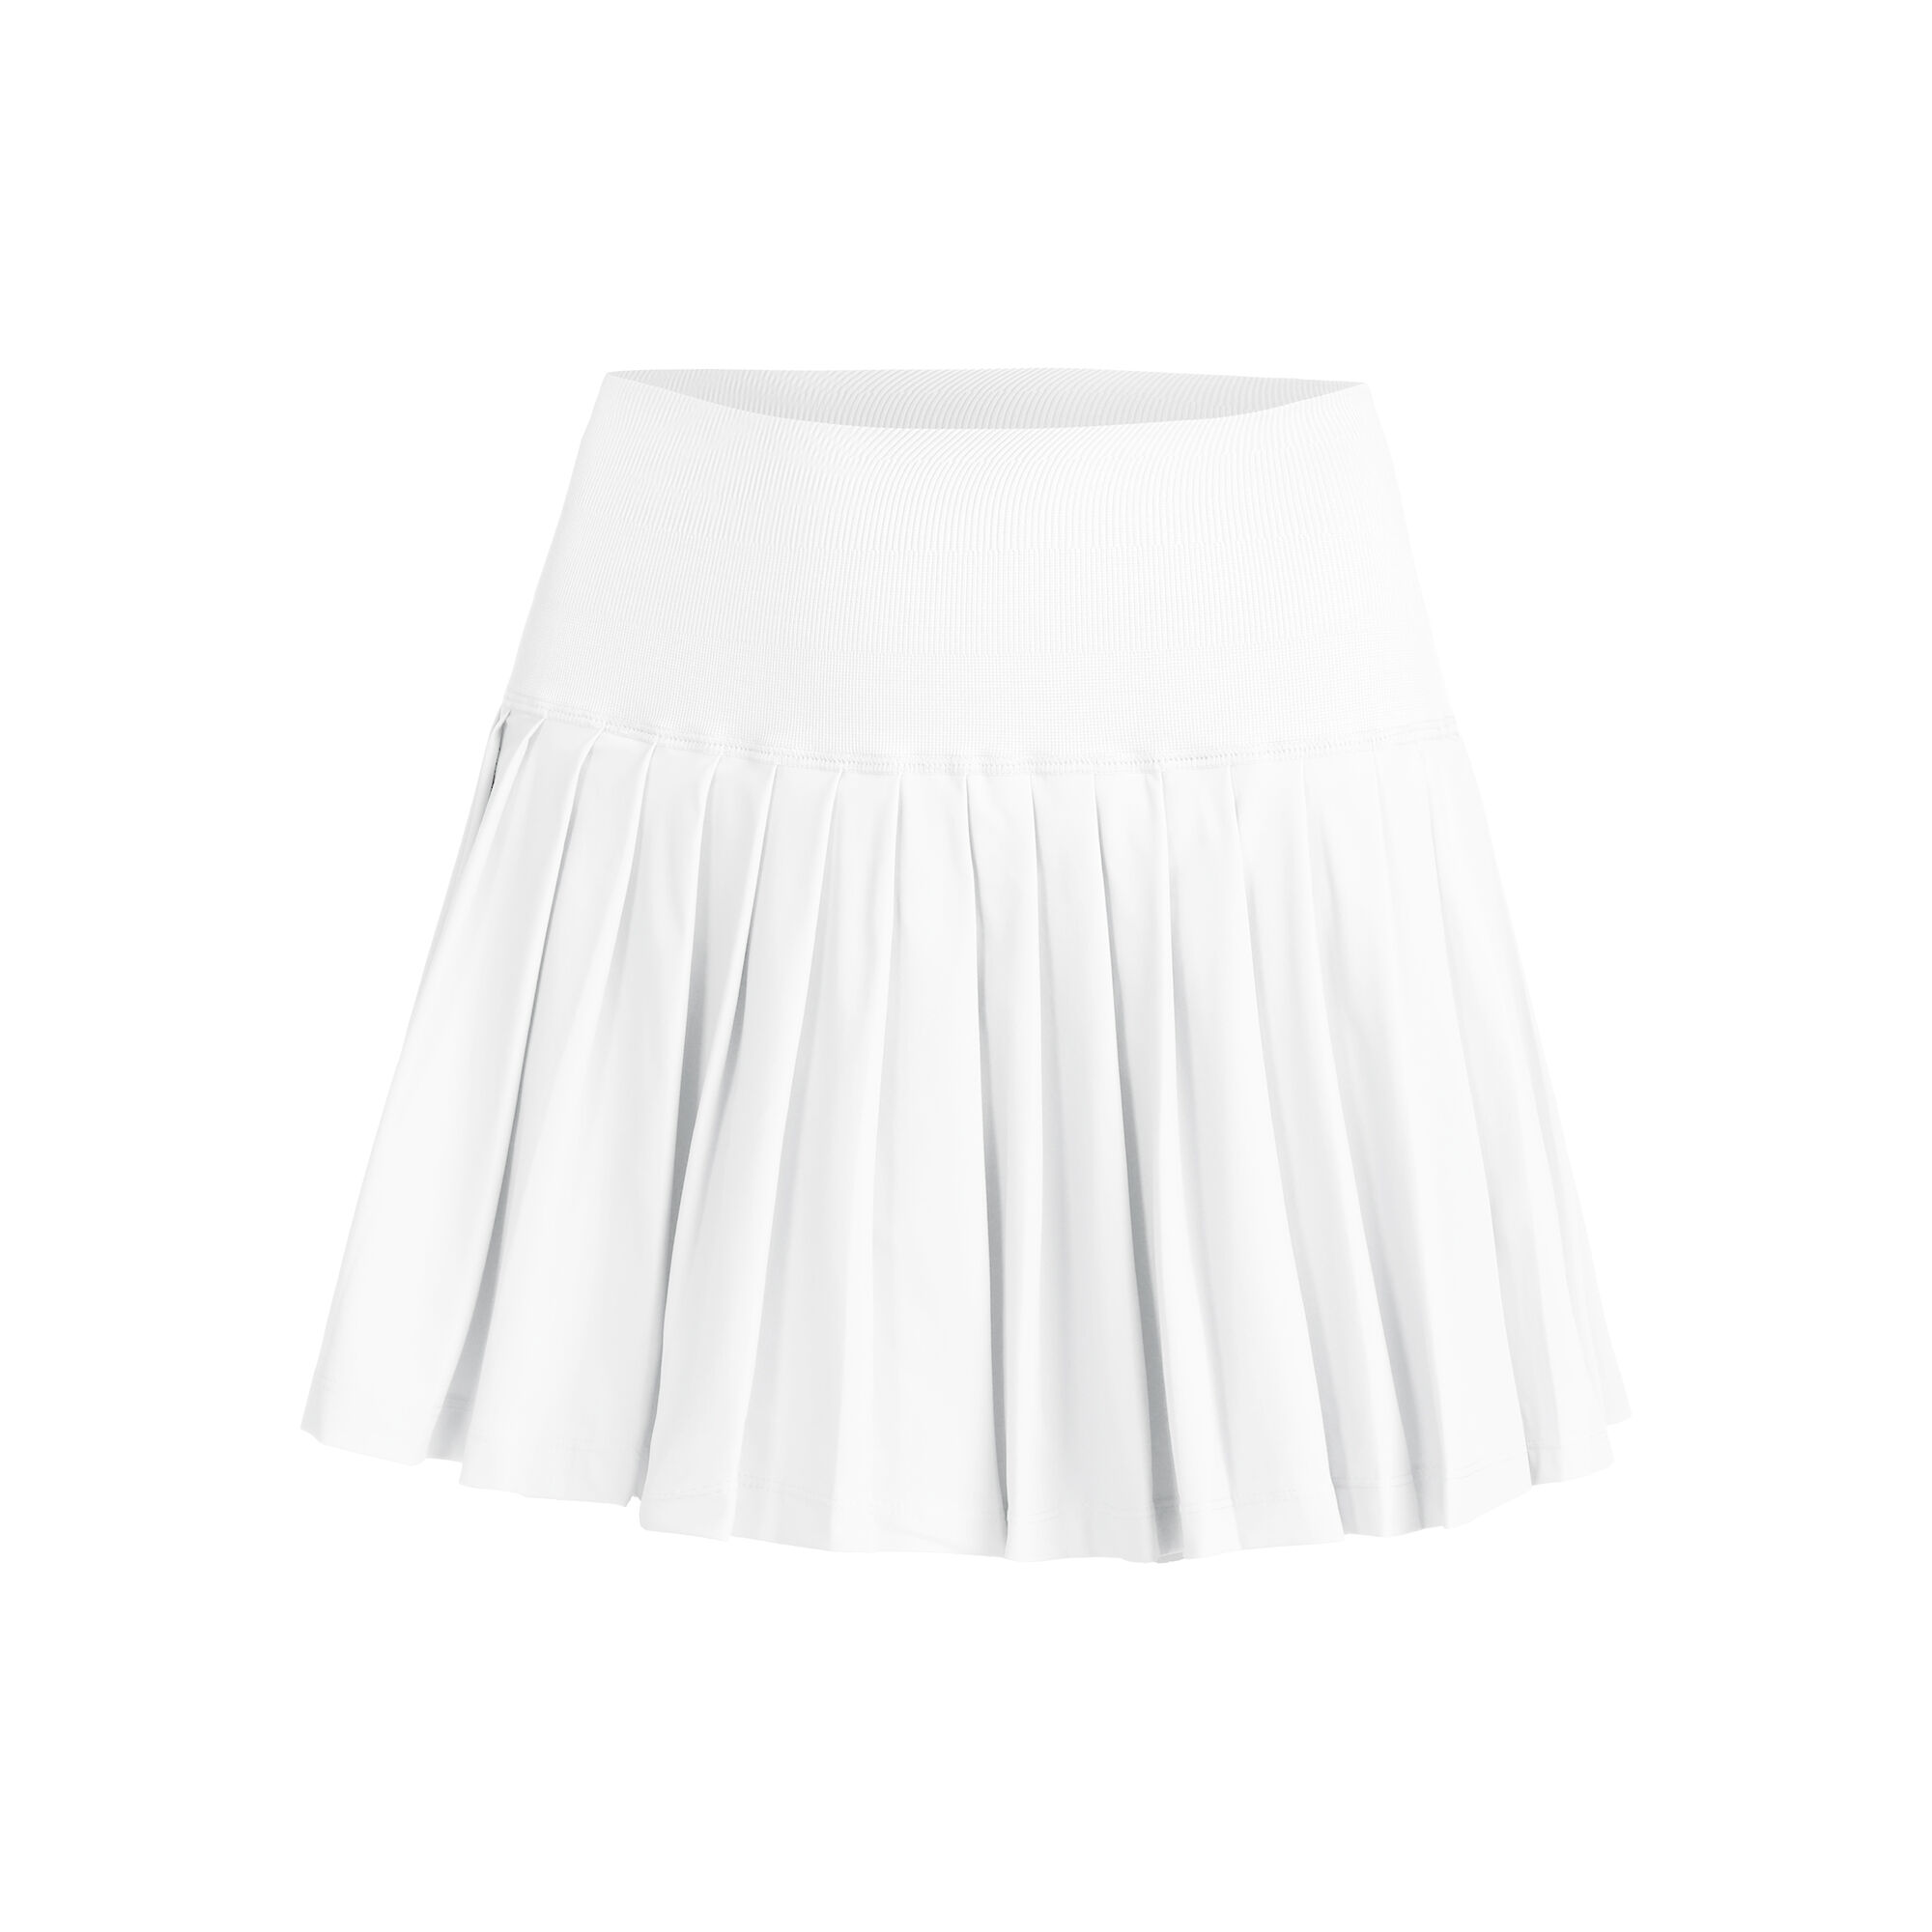 Midtown Tennis Skirt